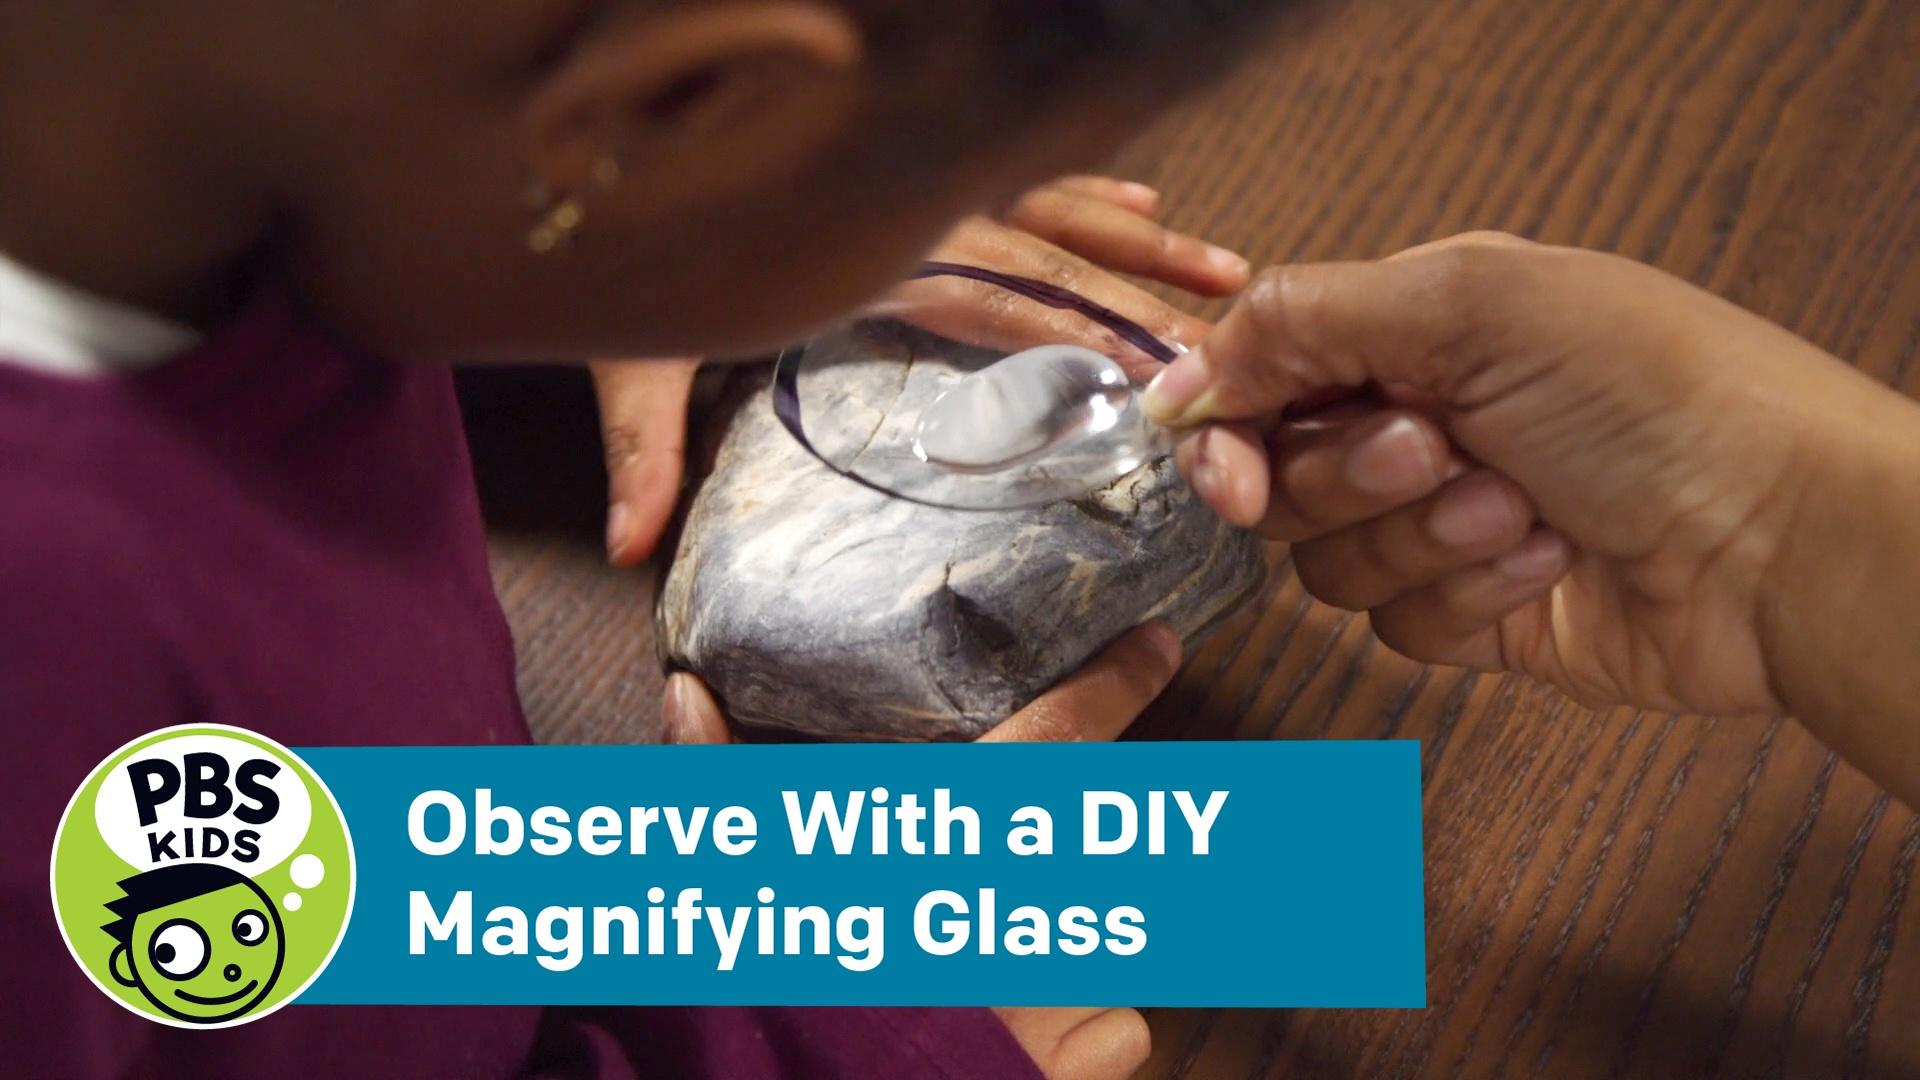 Magnifying Glasses Magnifying Glasses